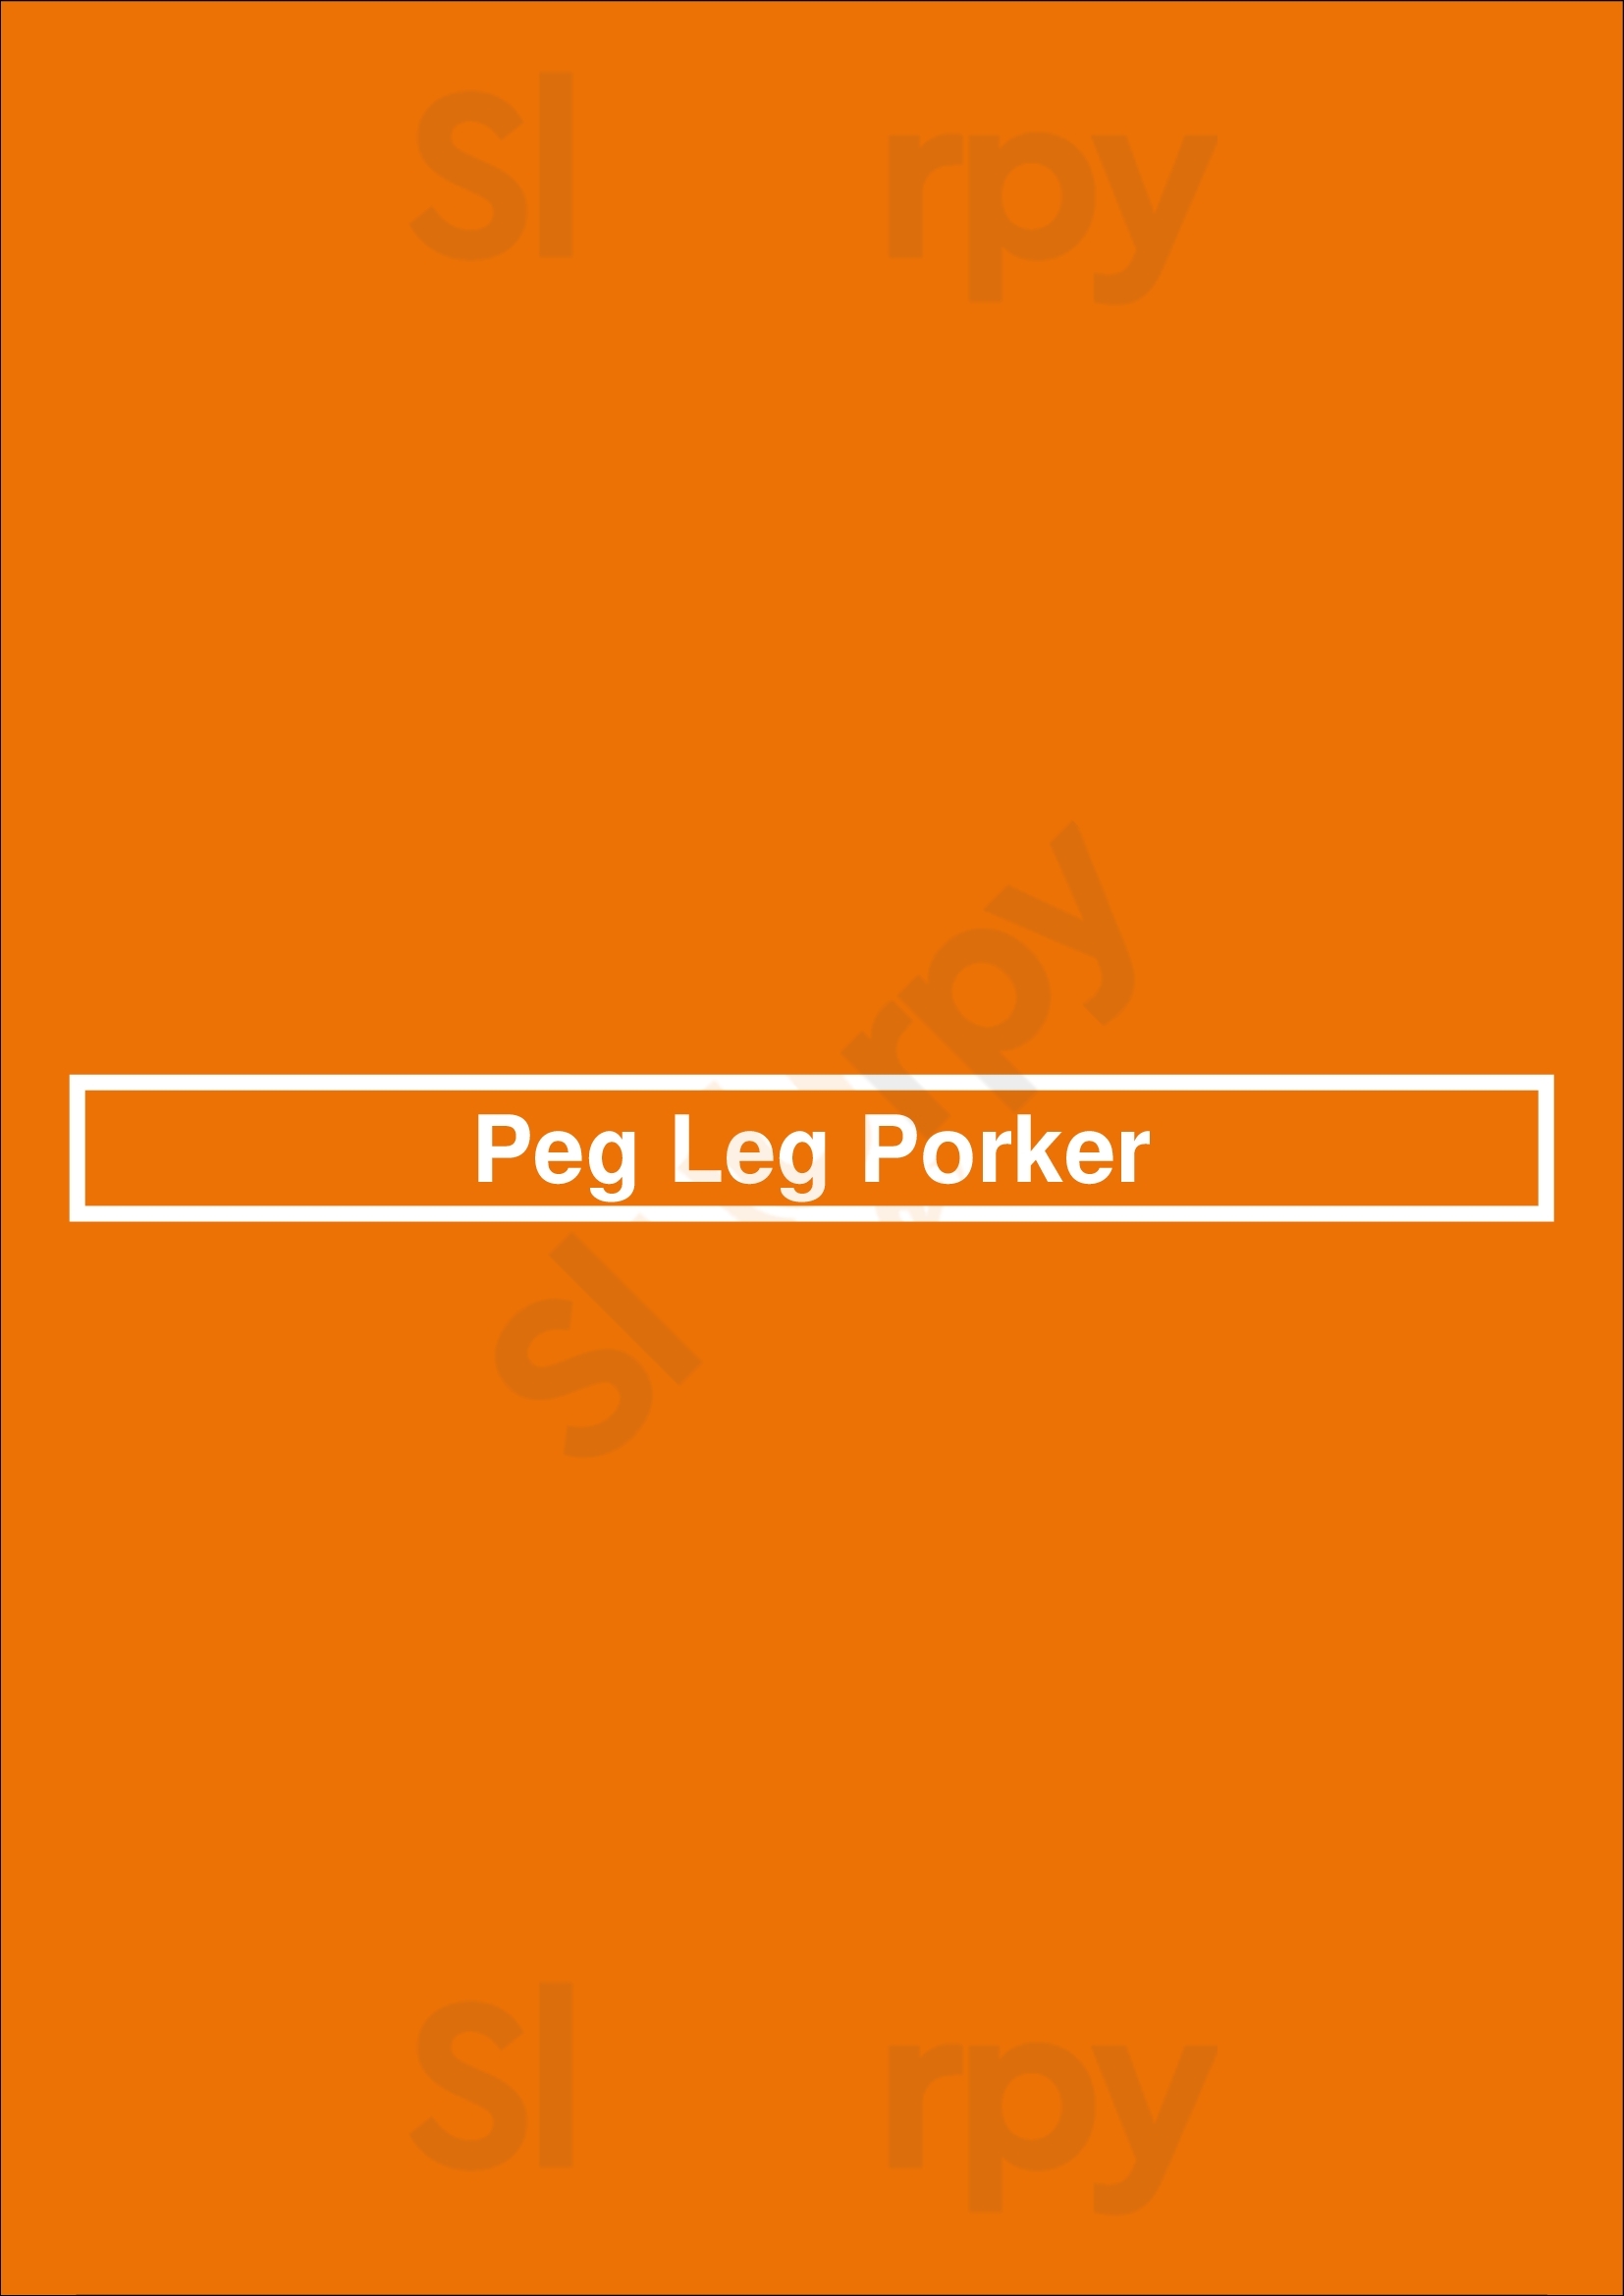 Peg Leg Porker Nashville Menu - 1